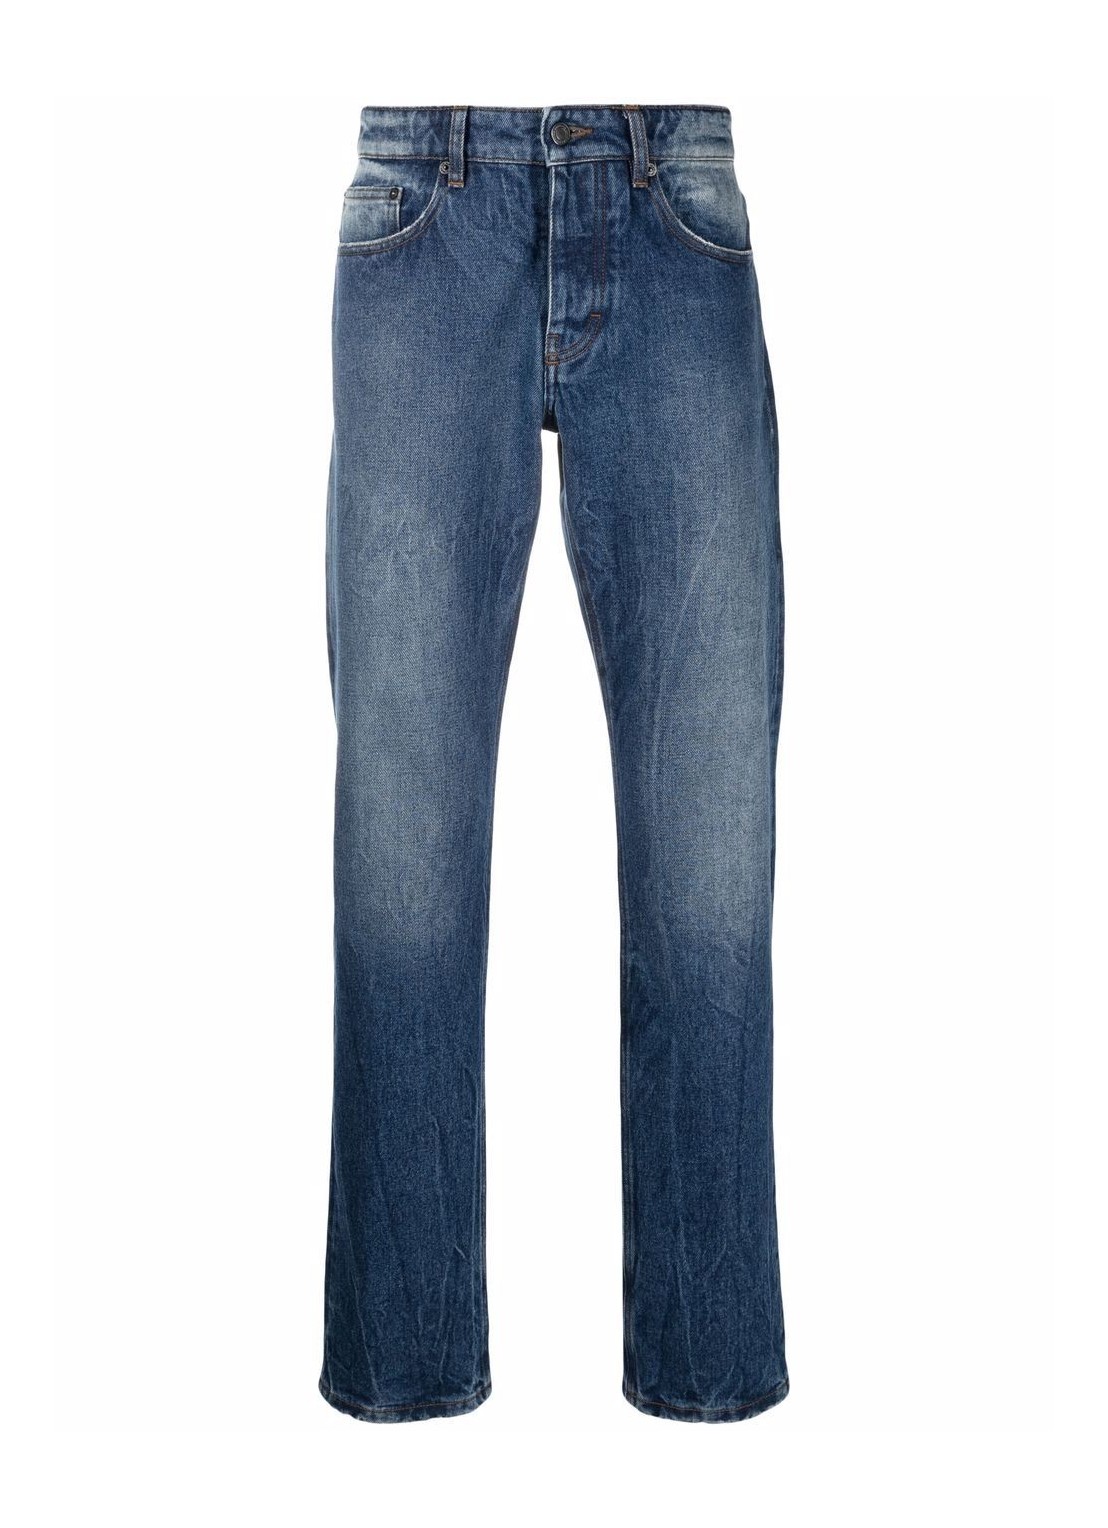 Pantalon jeans ami denim man classic fit jeans htr001601 480 talla 30
 